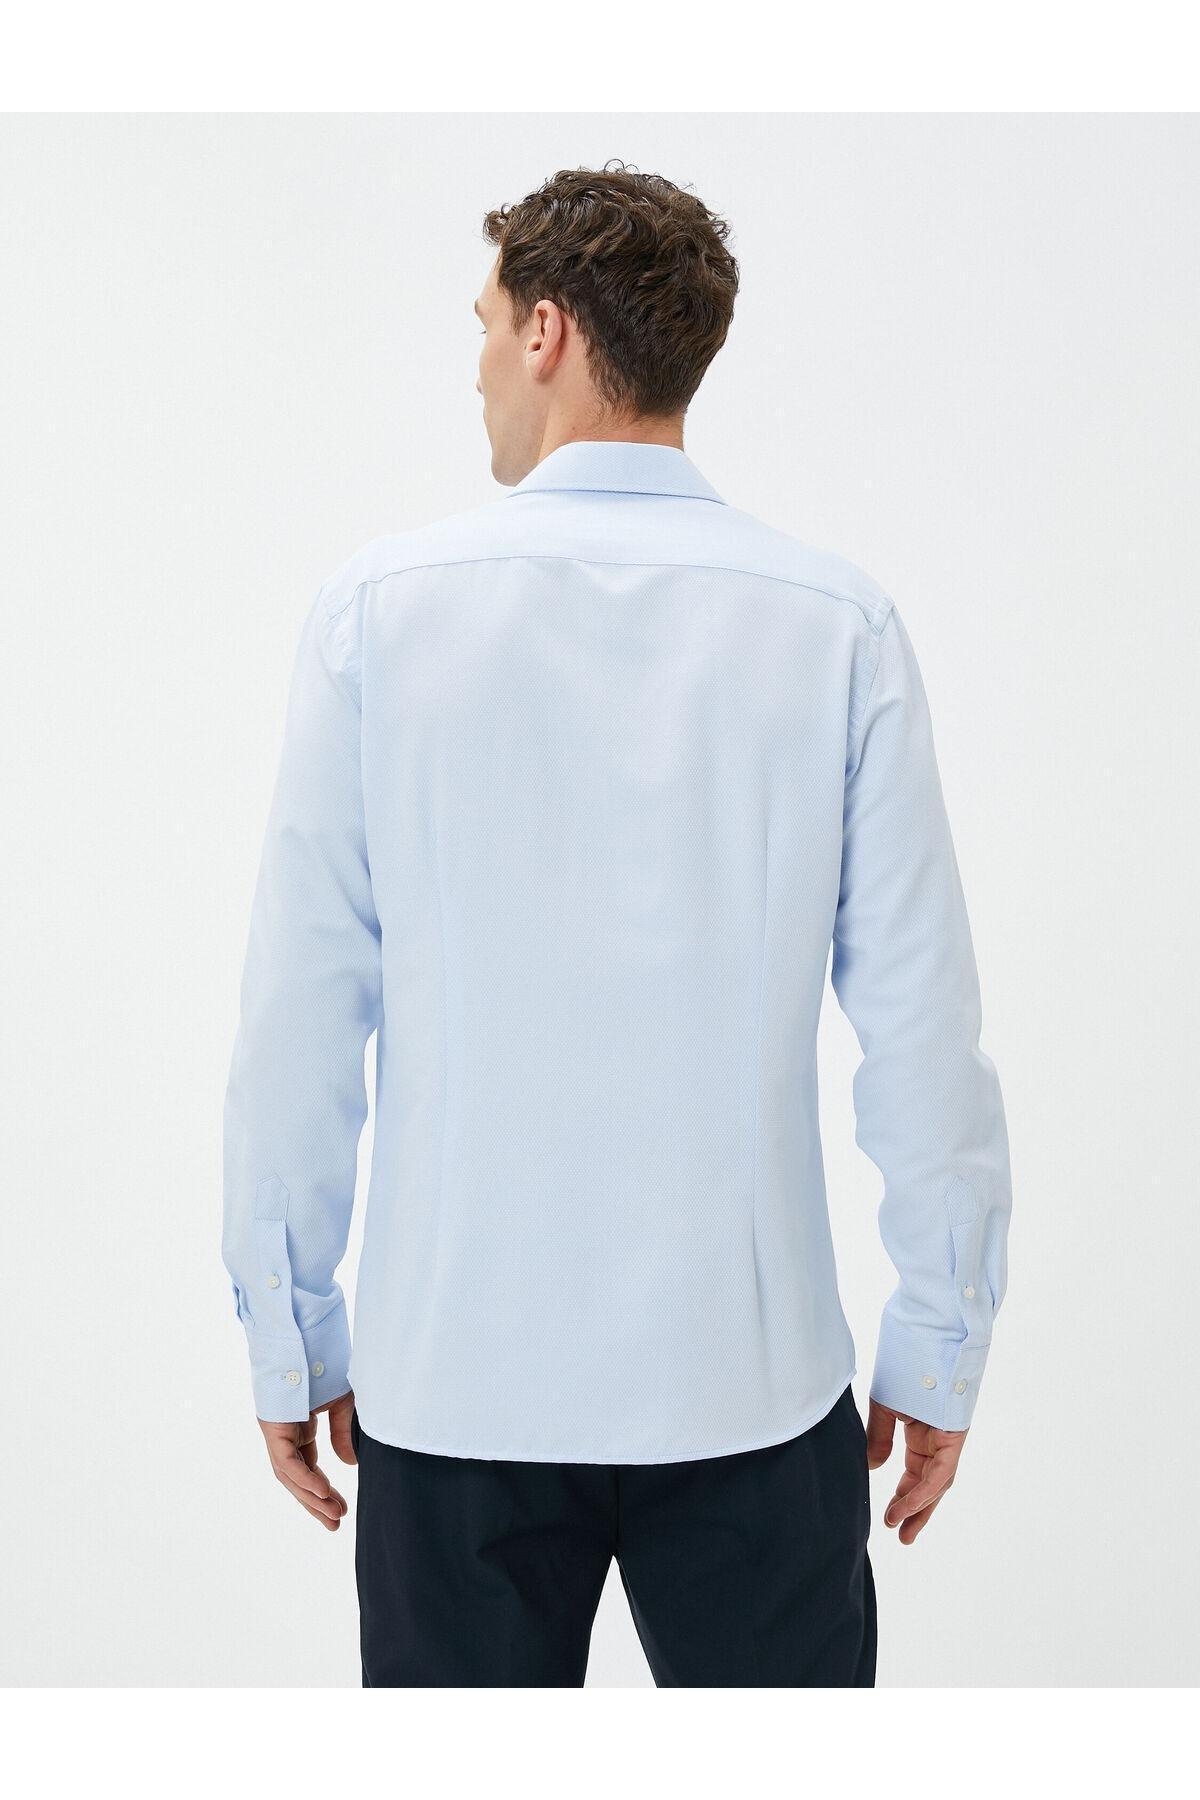 Koton - Blue Classic Collared Shirt